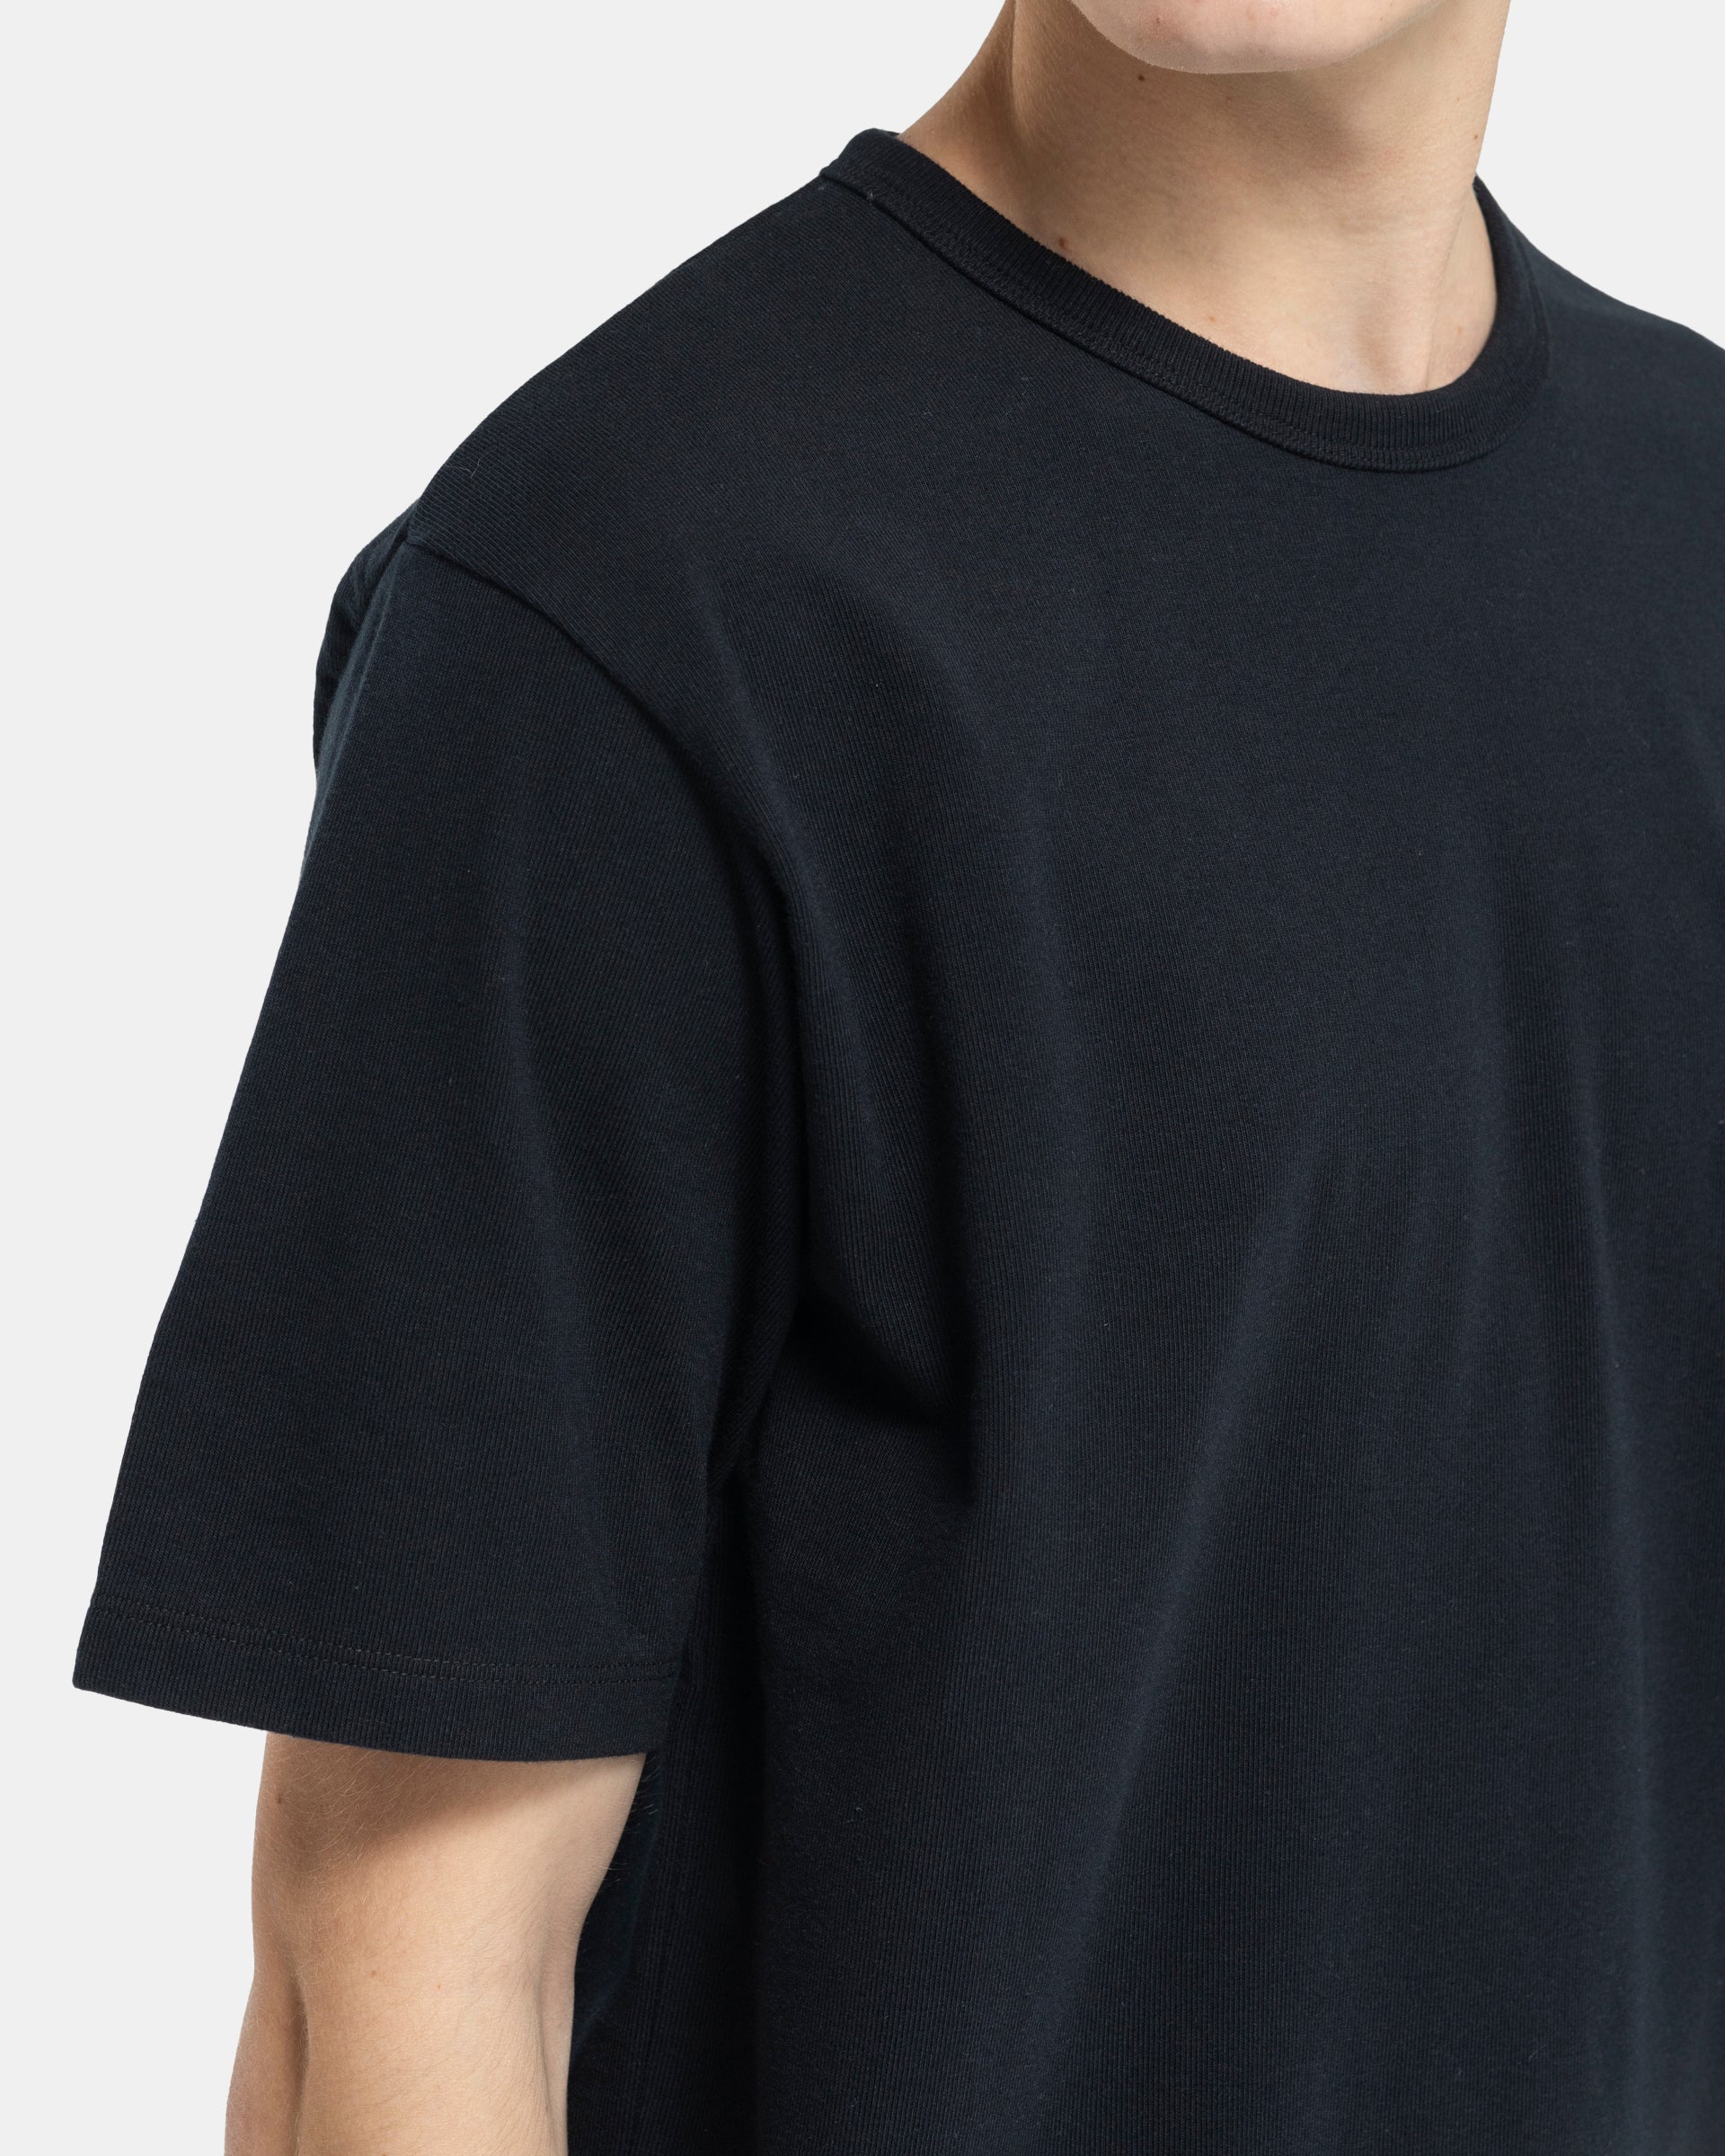 COOLMAX Jersey T-Shirt in Black